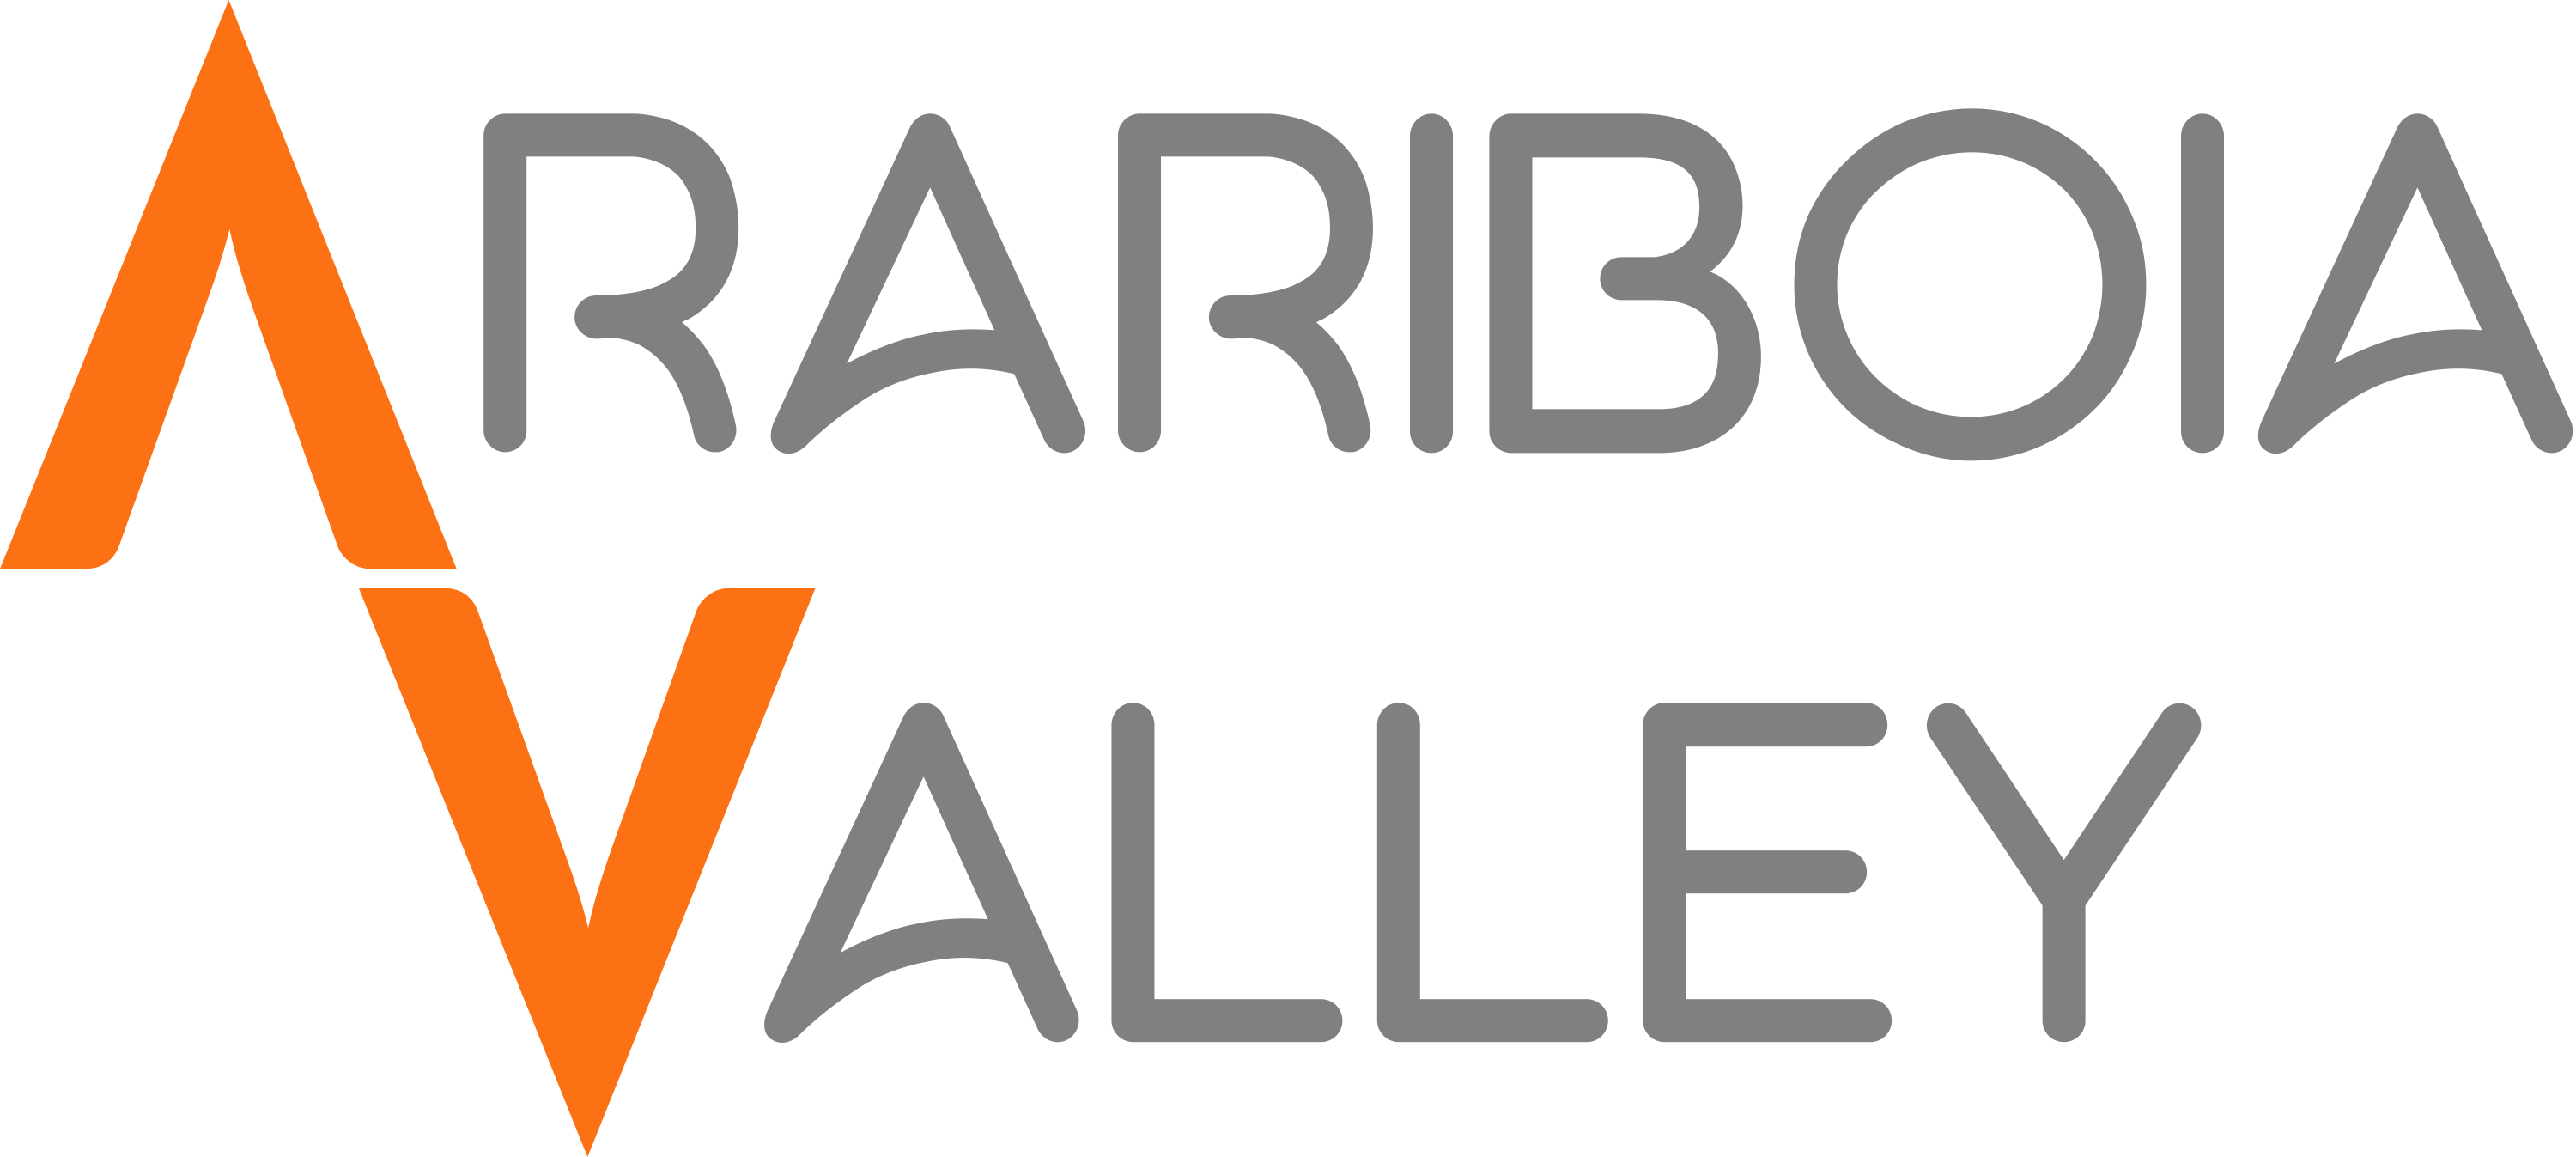 Arariboia Valley